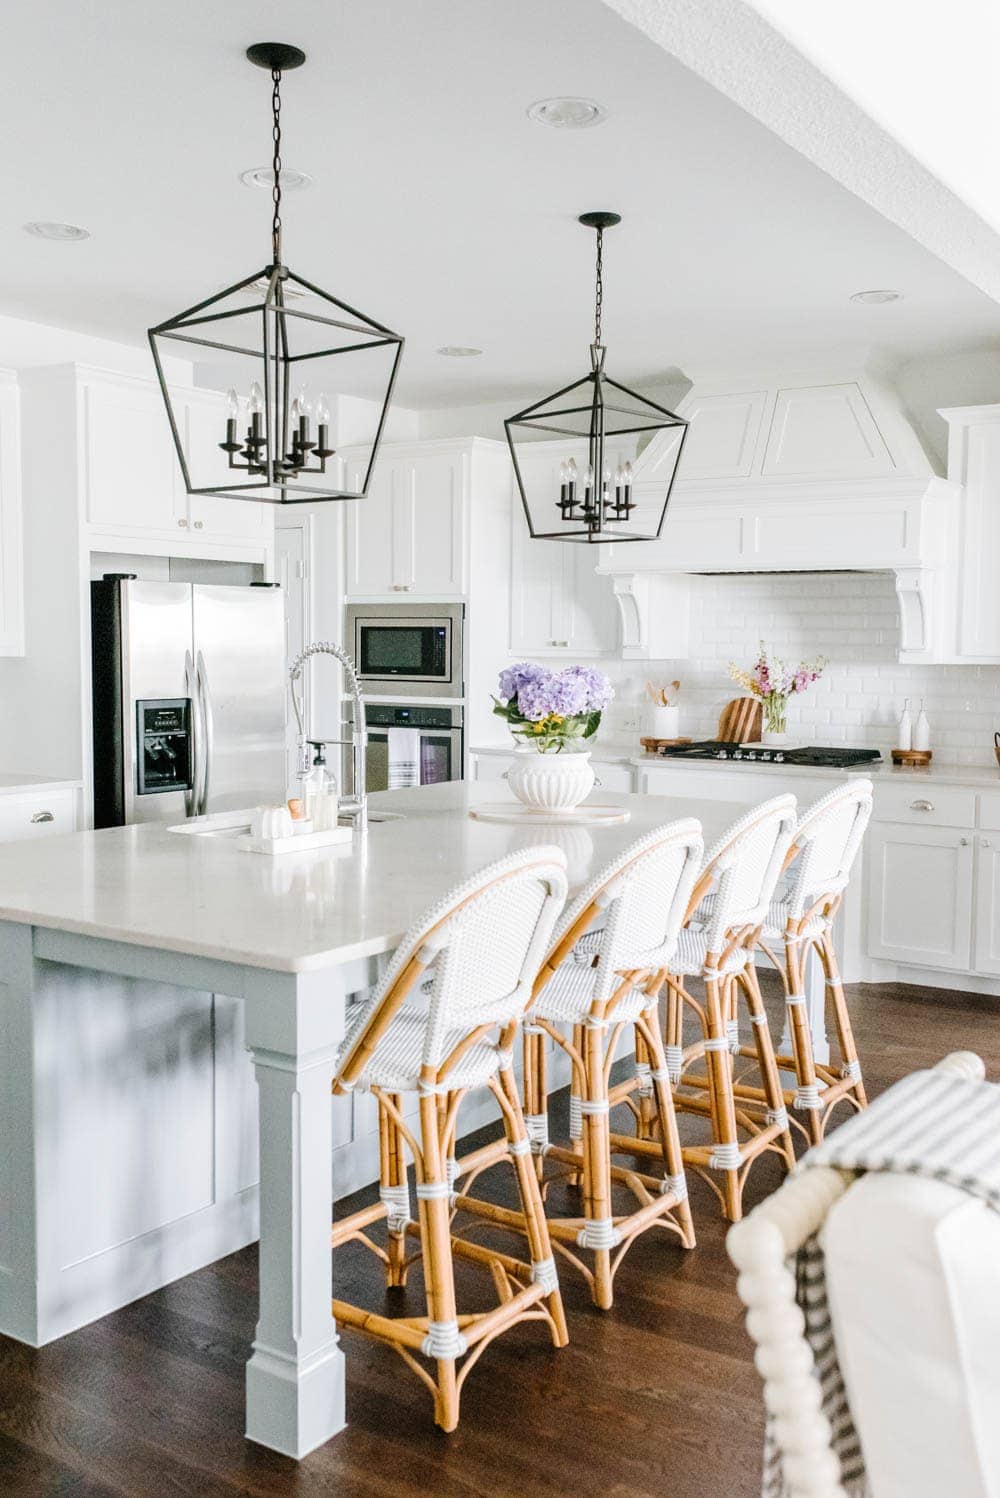 White kitchen with Serena & Lily barstools and quartz countertops.